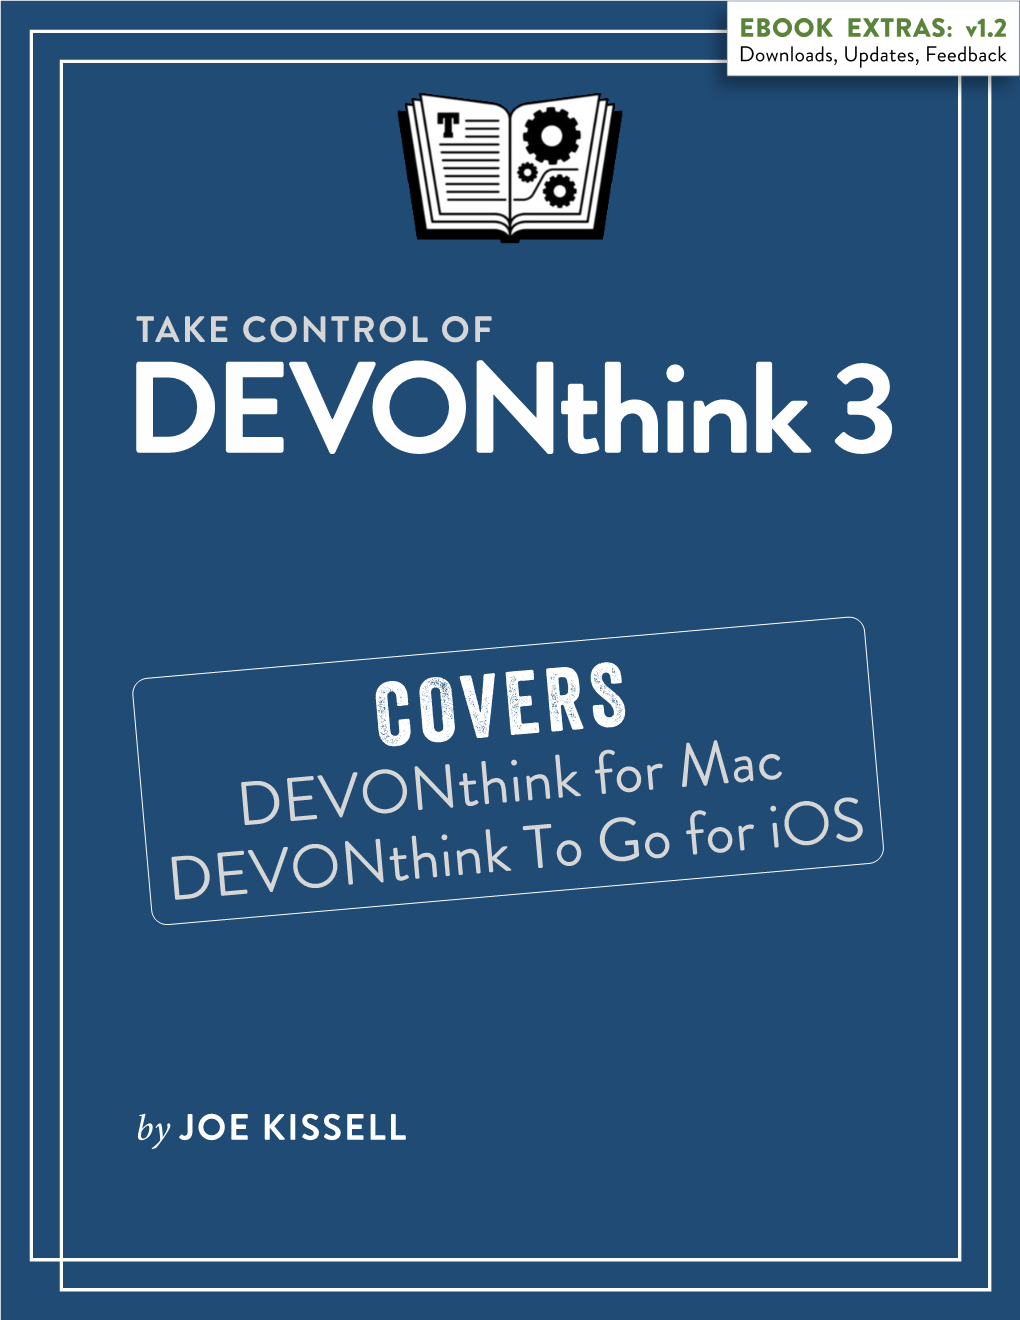 Take Control of Devonthink 3 (1.2)